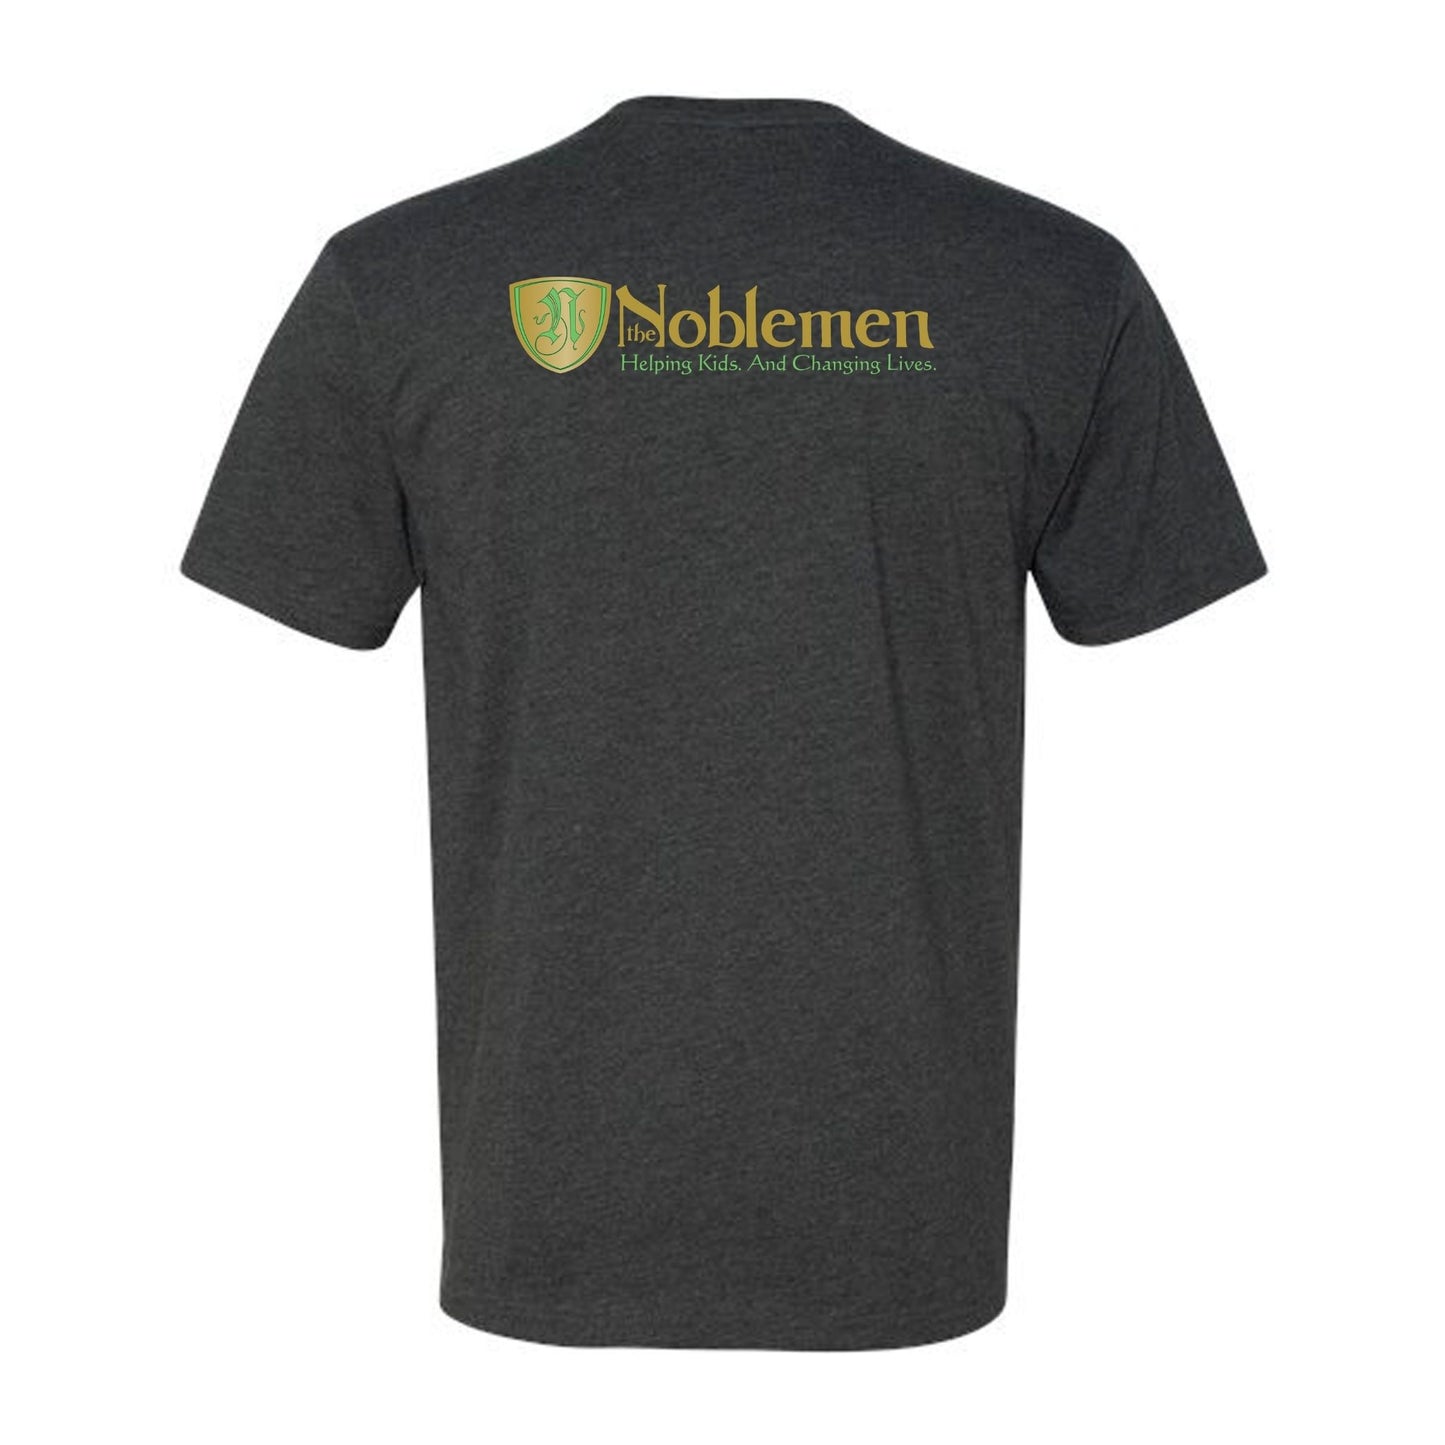 Noblemen - Unisex Short-Sleeve T-Shirt